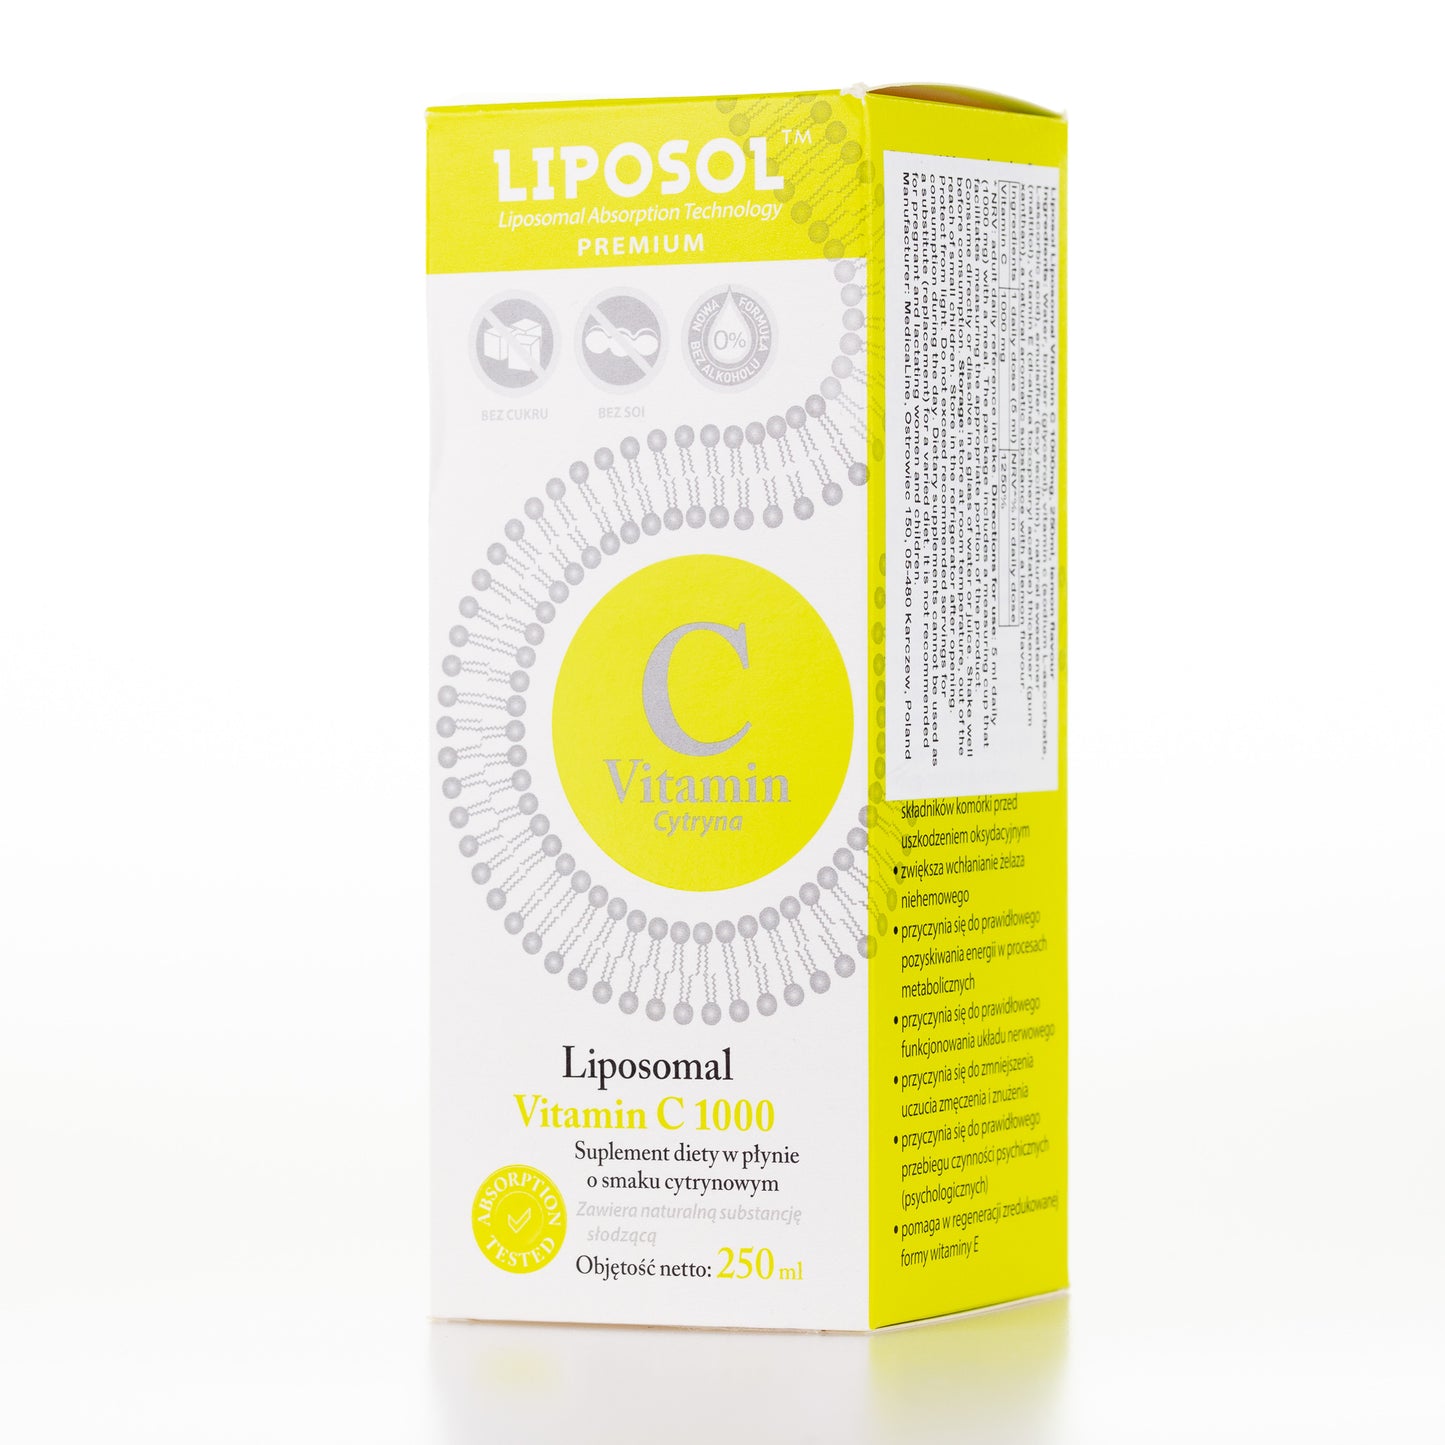 Liposol, Liposomal Vitamin C 1000mg, 250ml, lemon flavour, Liposol, Aliness